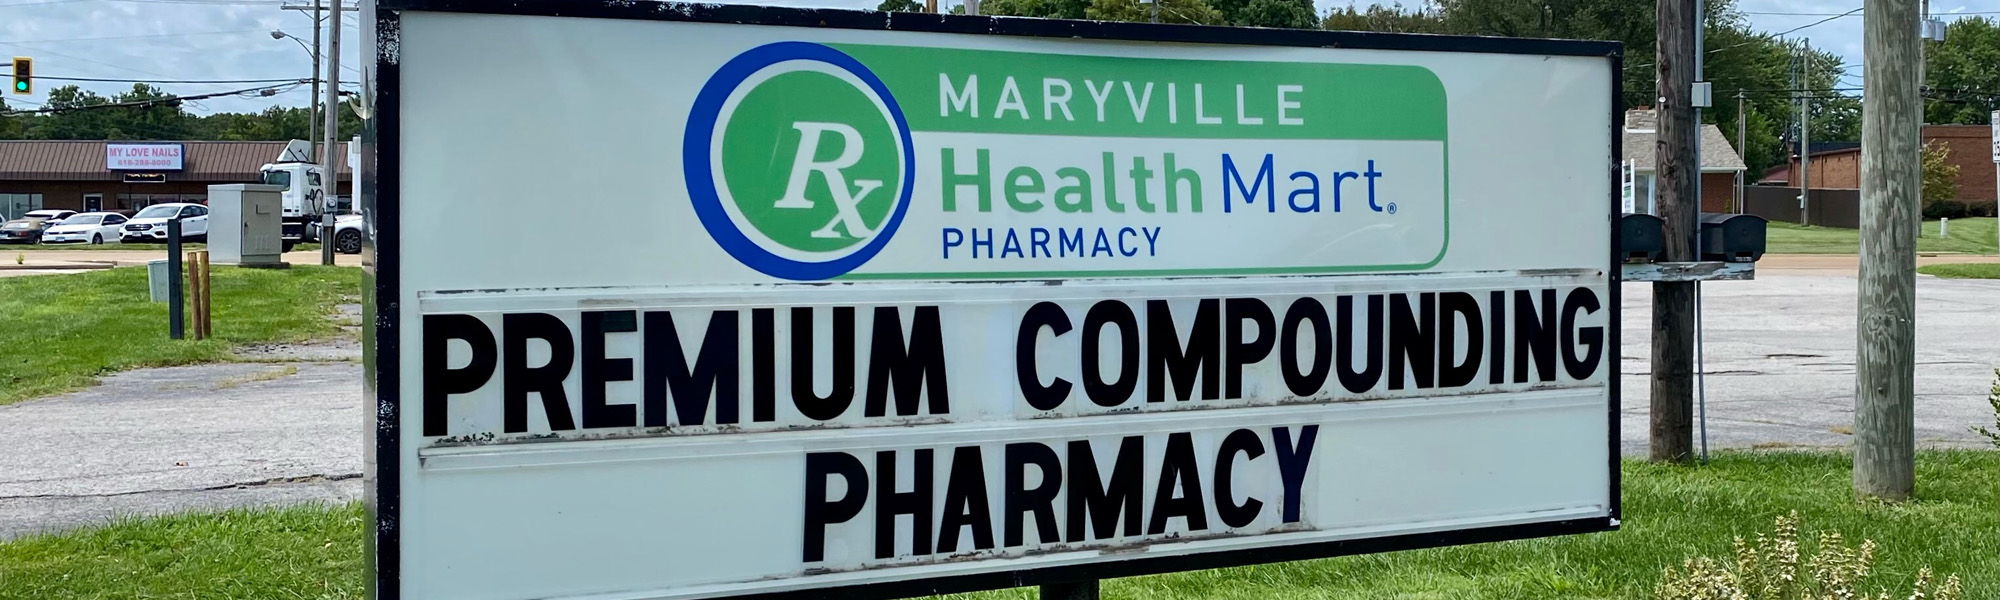 Maryville IL Pharmacy Premium Compounding Pharmacy